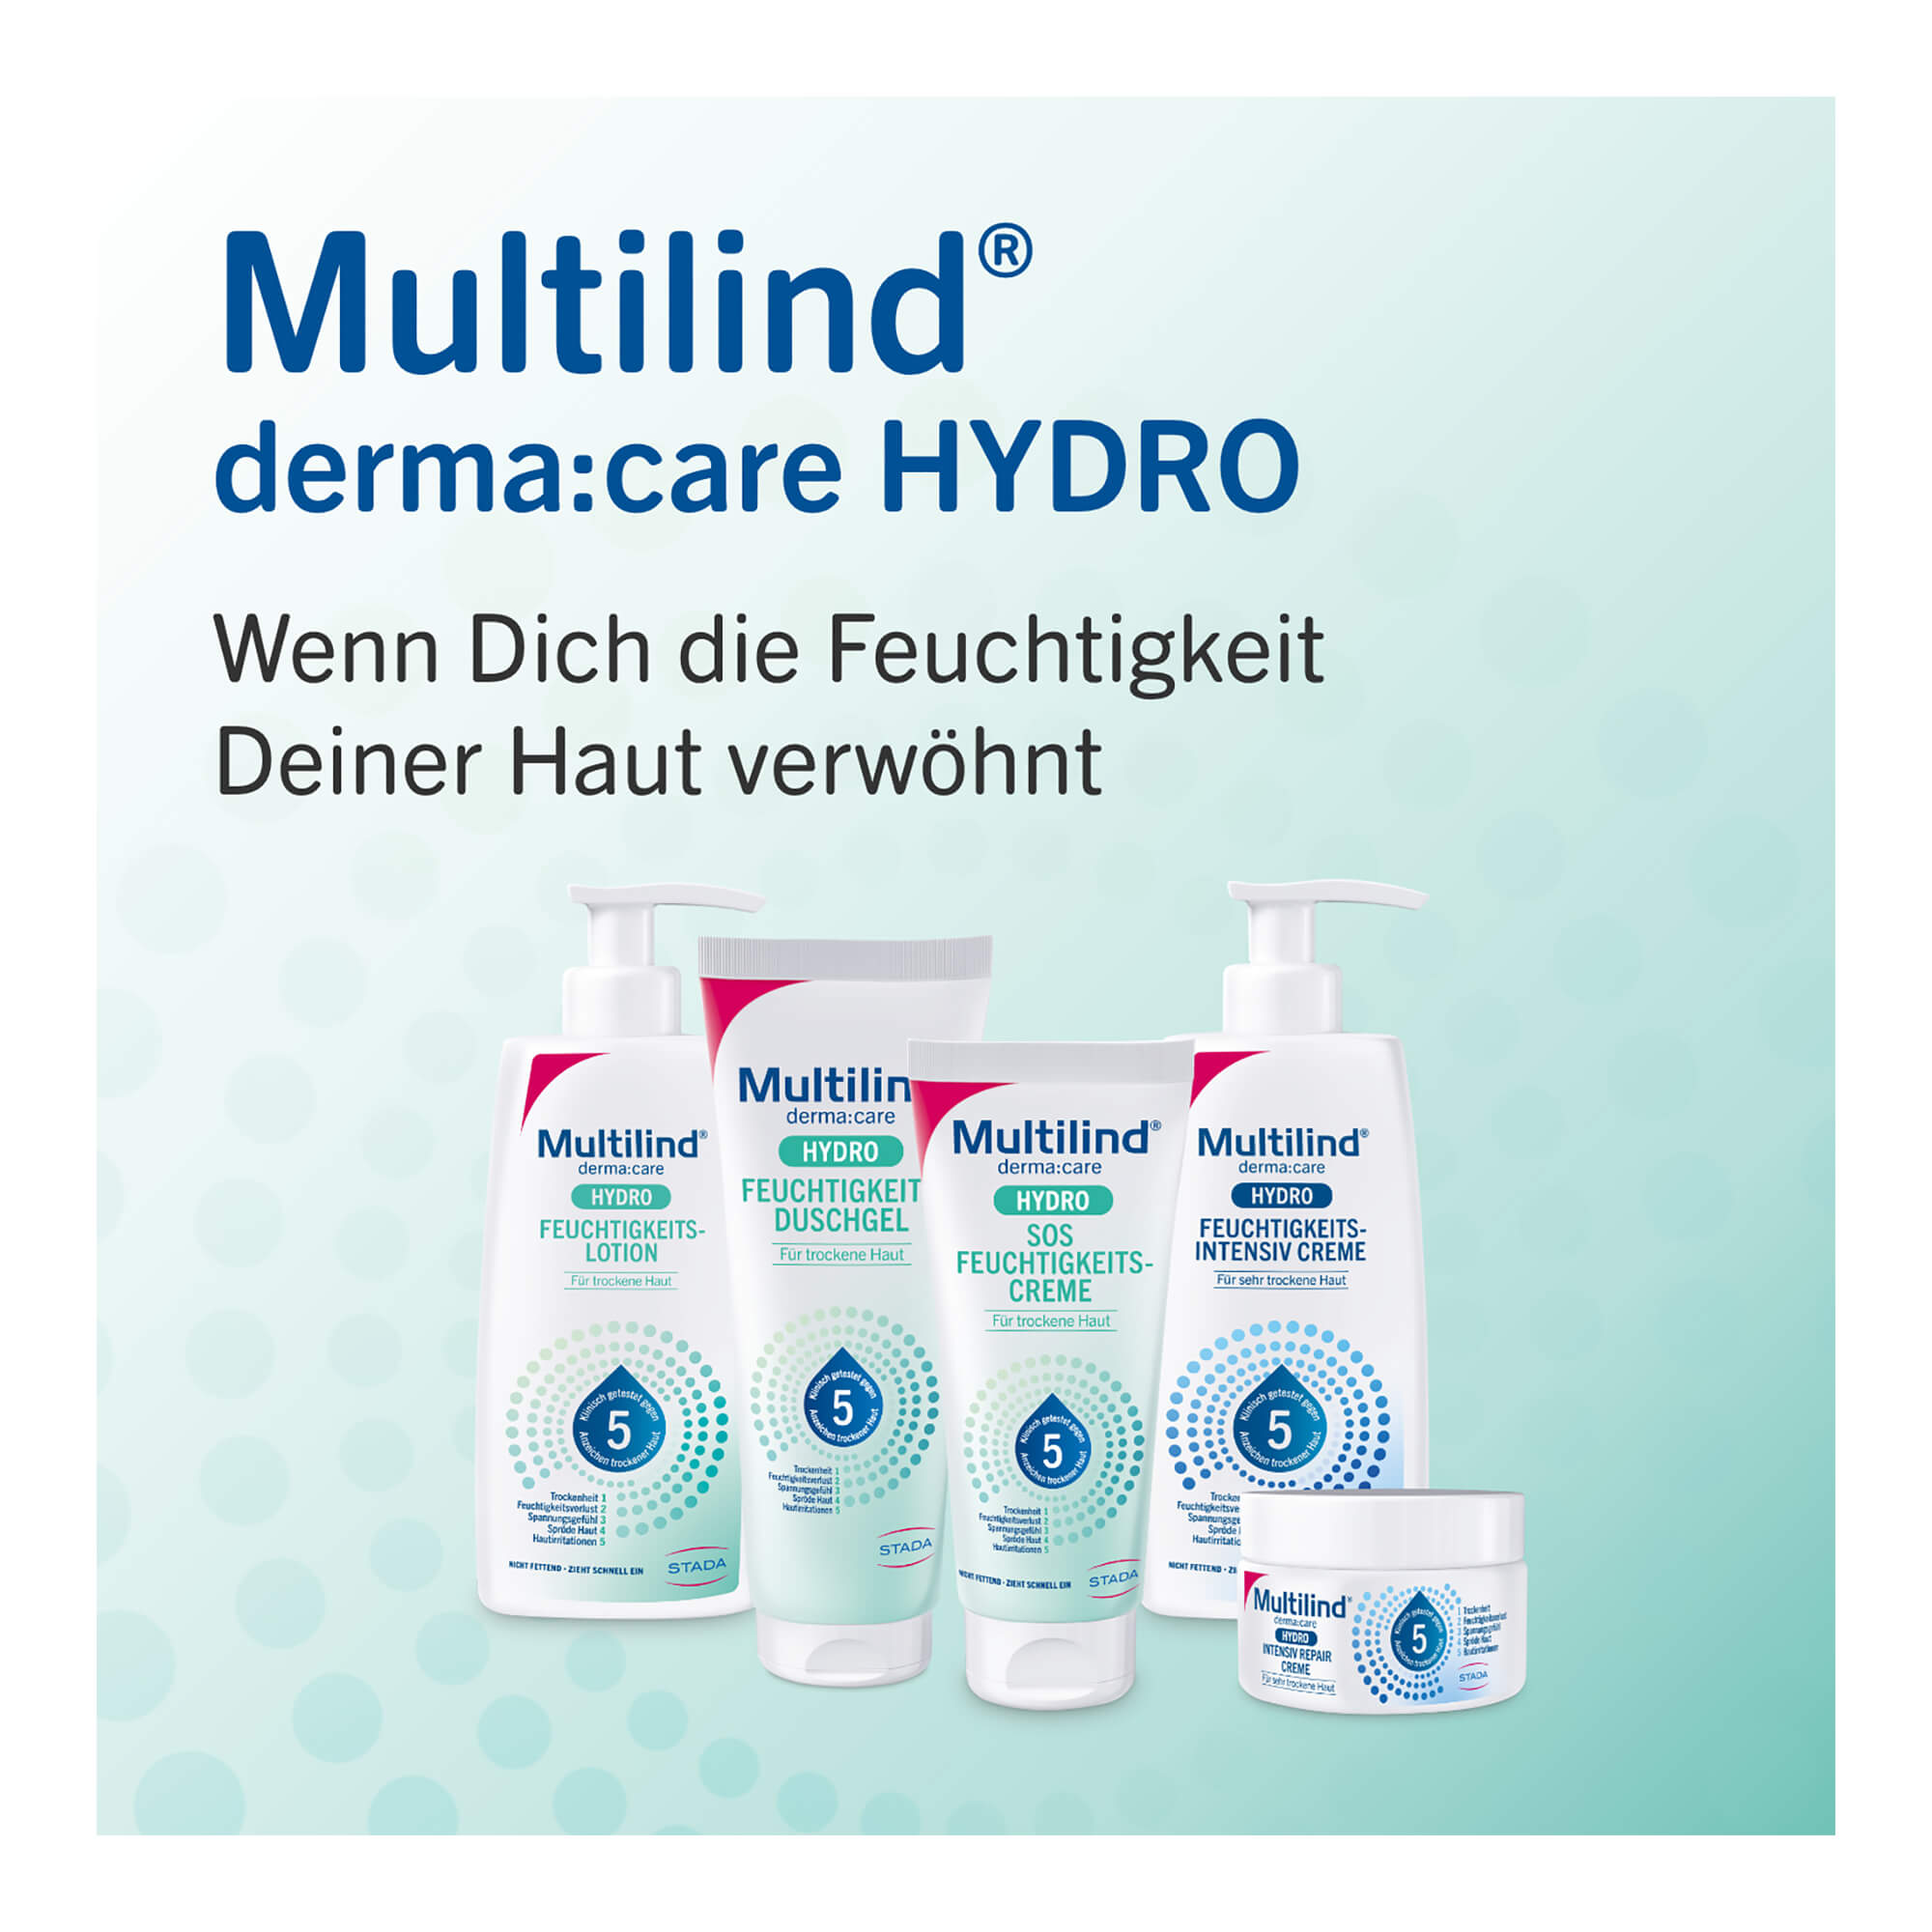 Multilind derma:care Hydro Produktrange